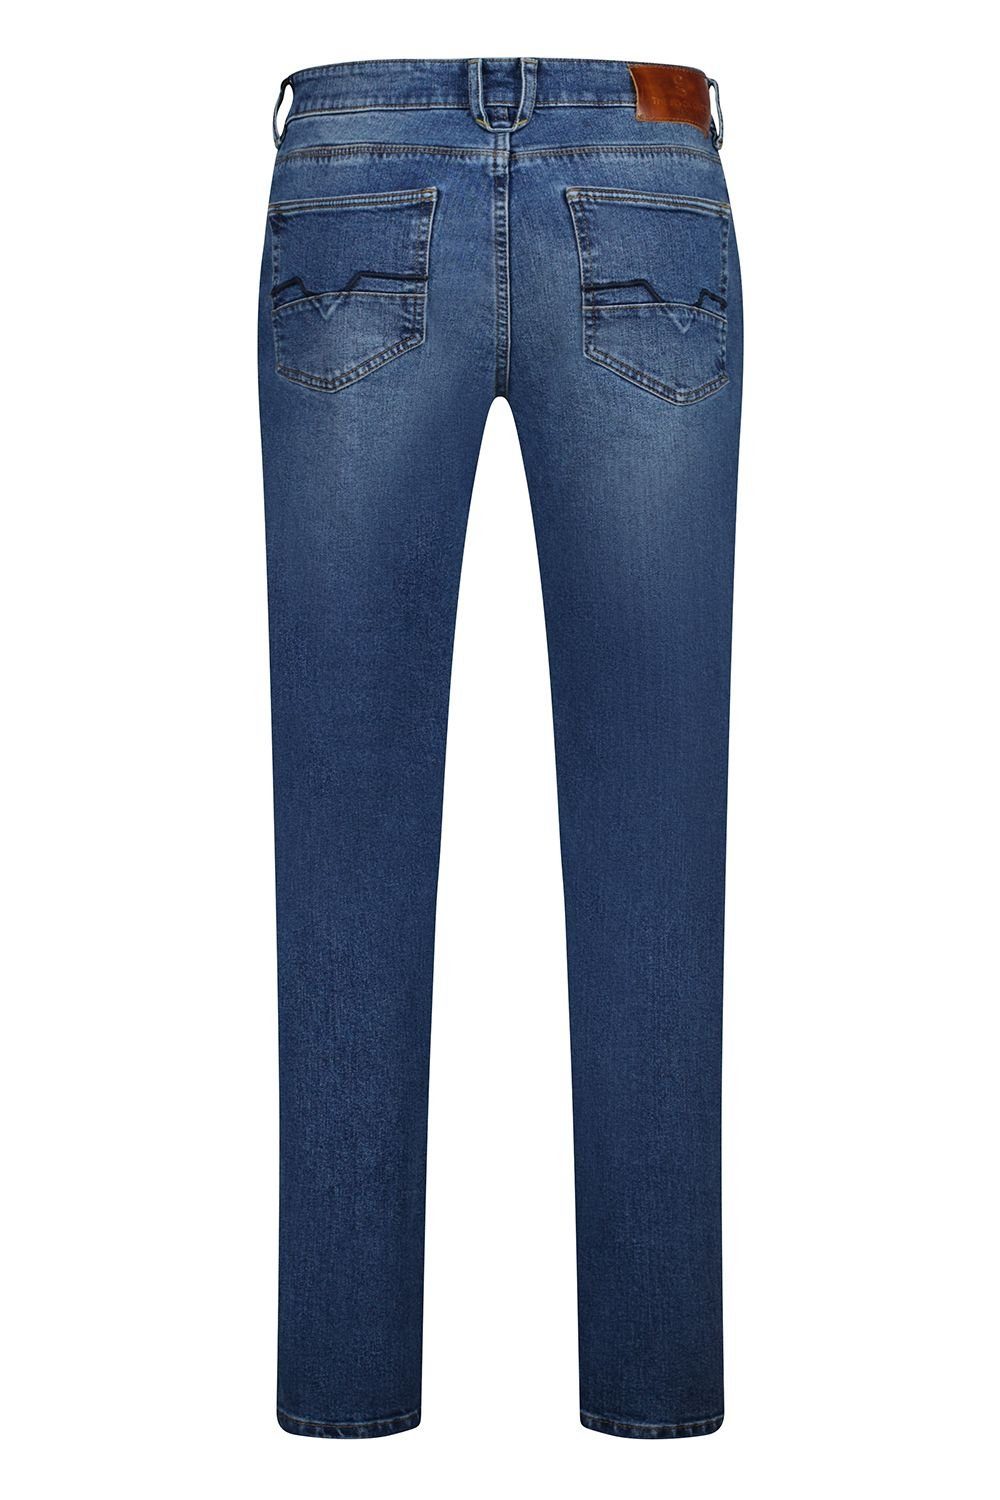 Atelier GARDEUR 5-Pocket-Jeans